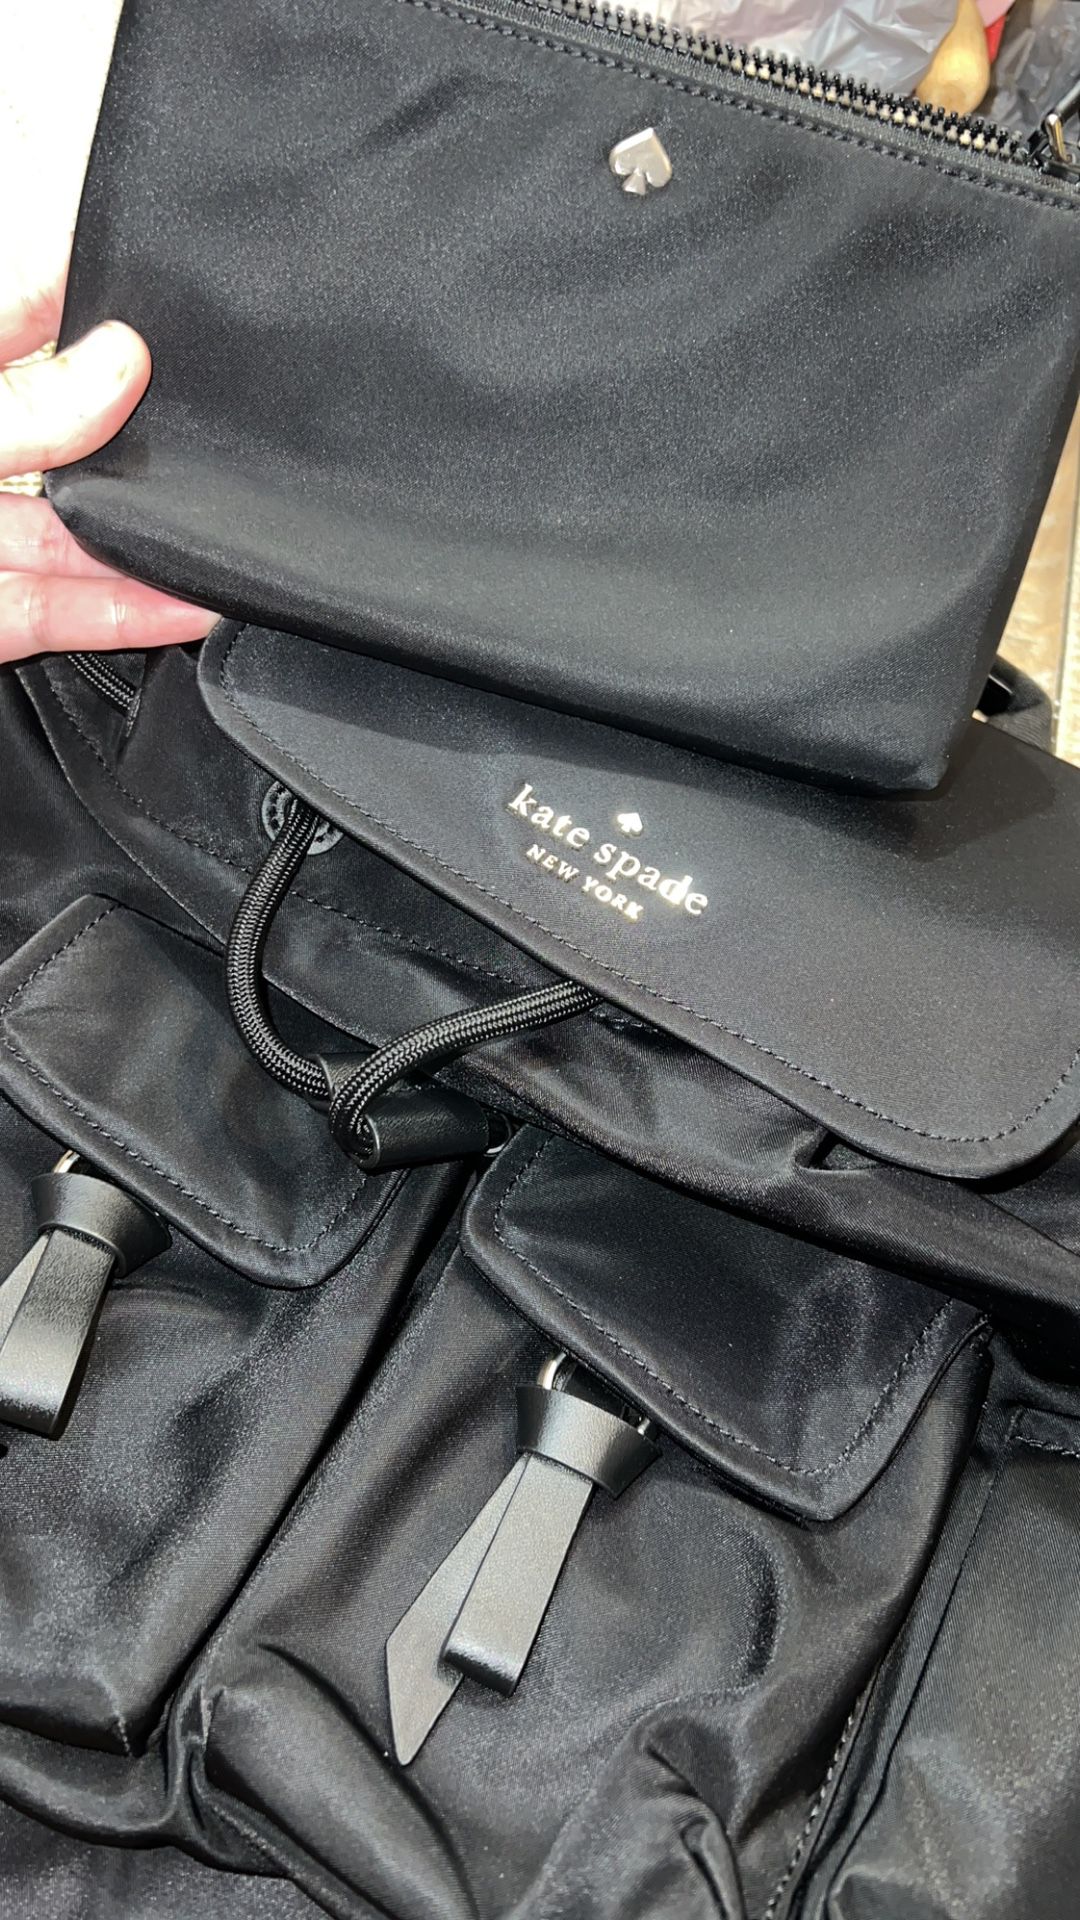 Kate Spade backpack + Wristlet wallet